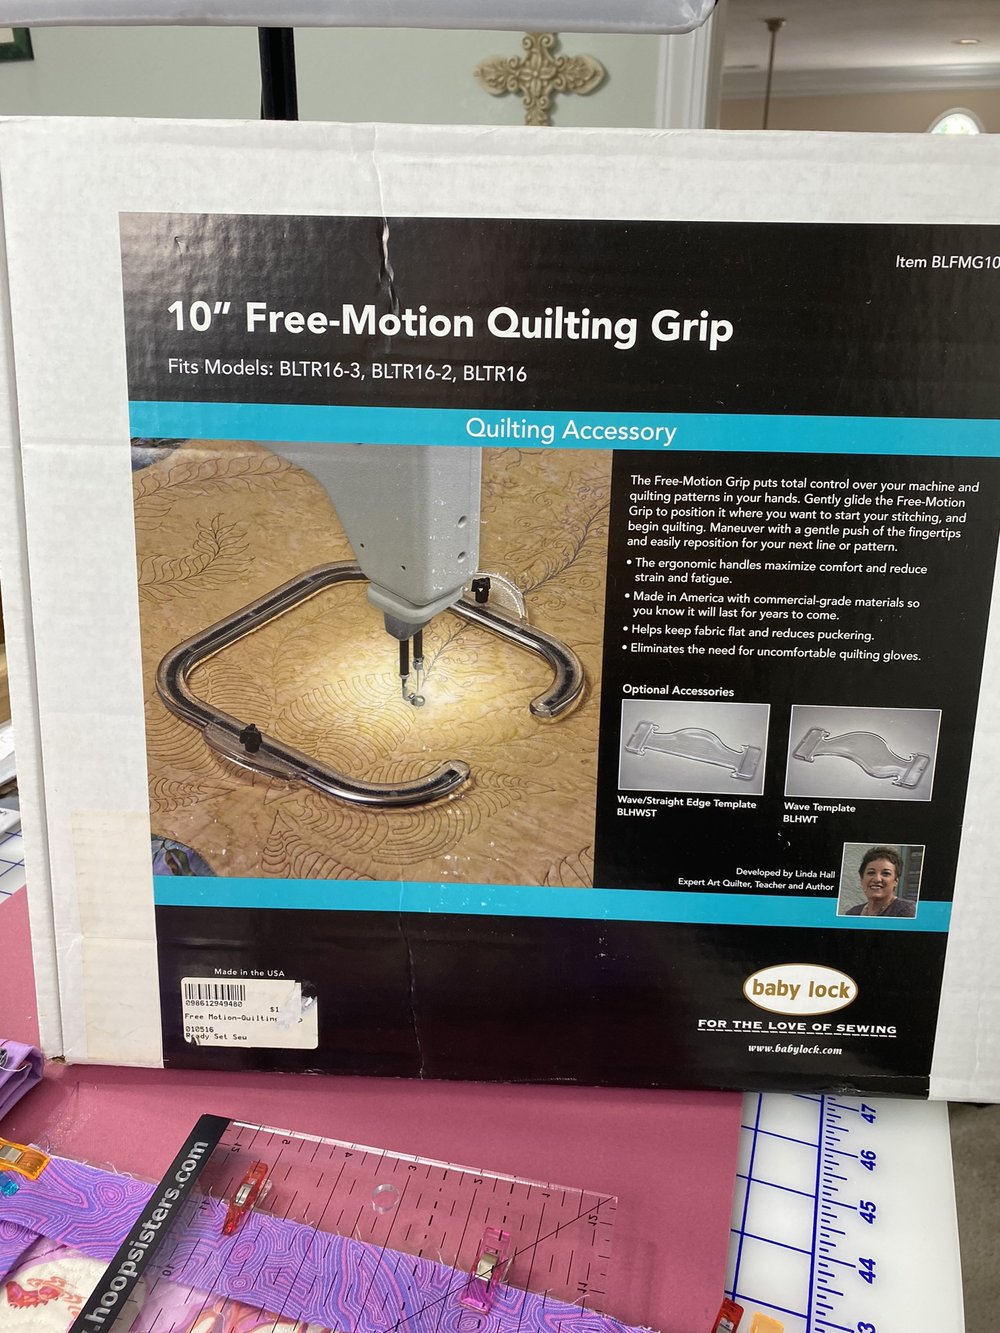 Grip & Stitch™ free motion quilting disks